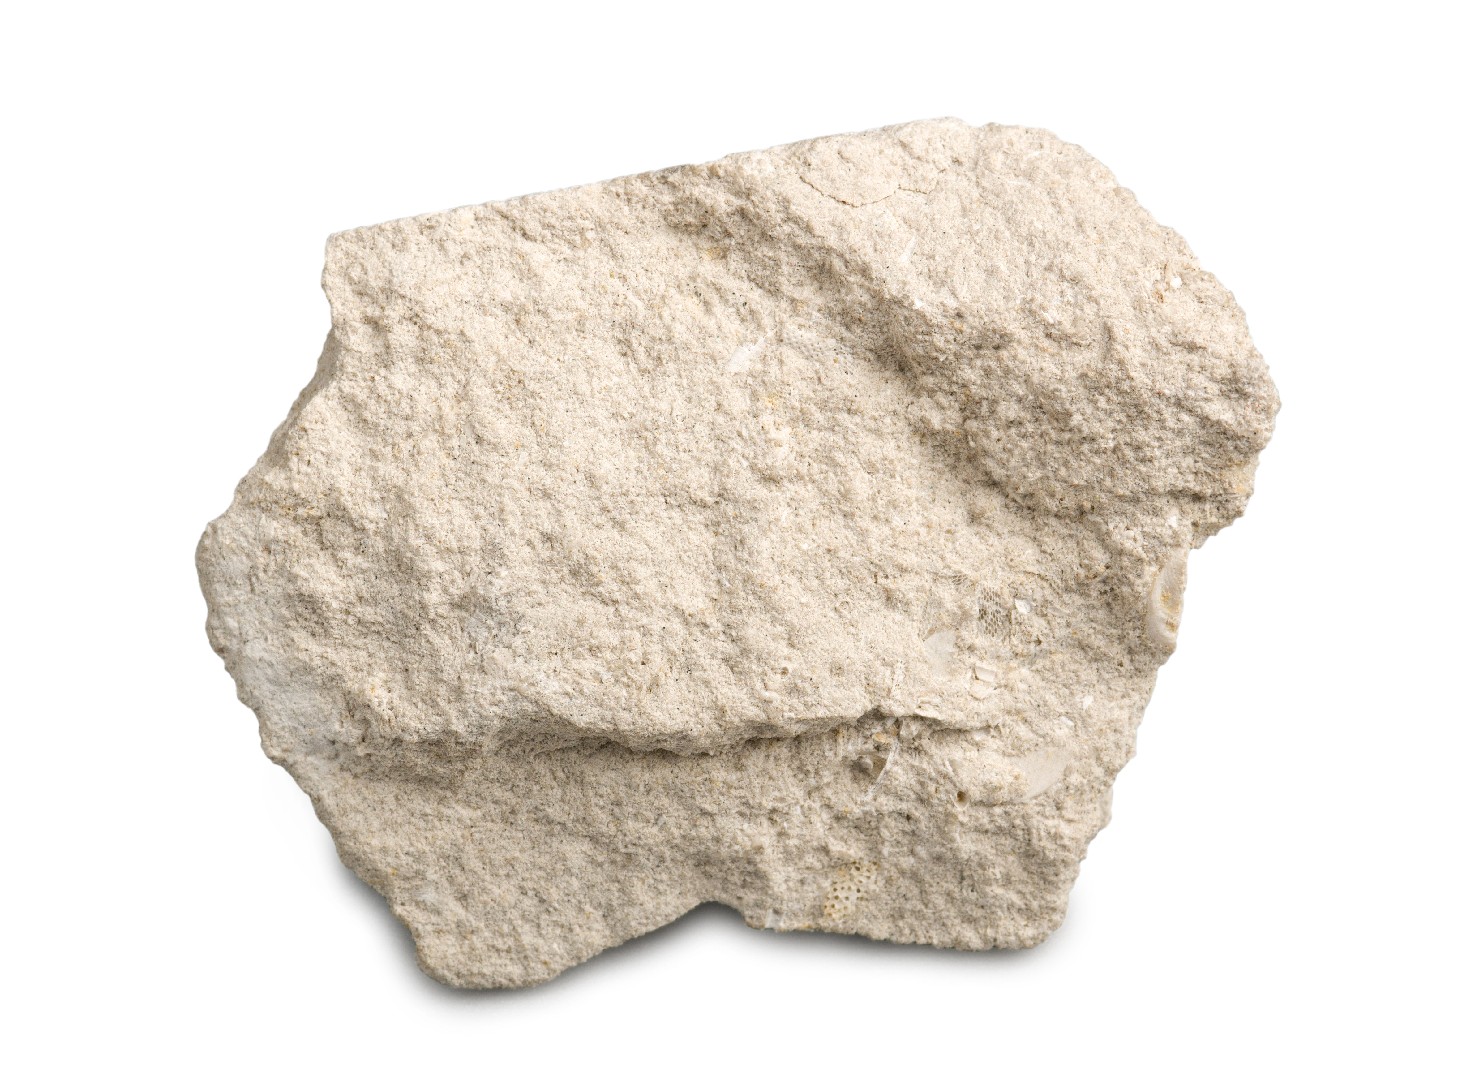 Caliza (Limestone)